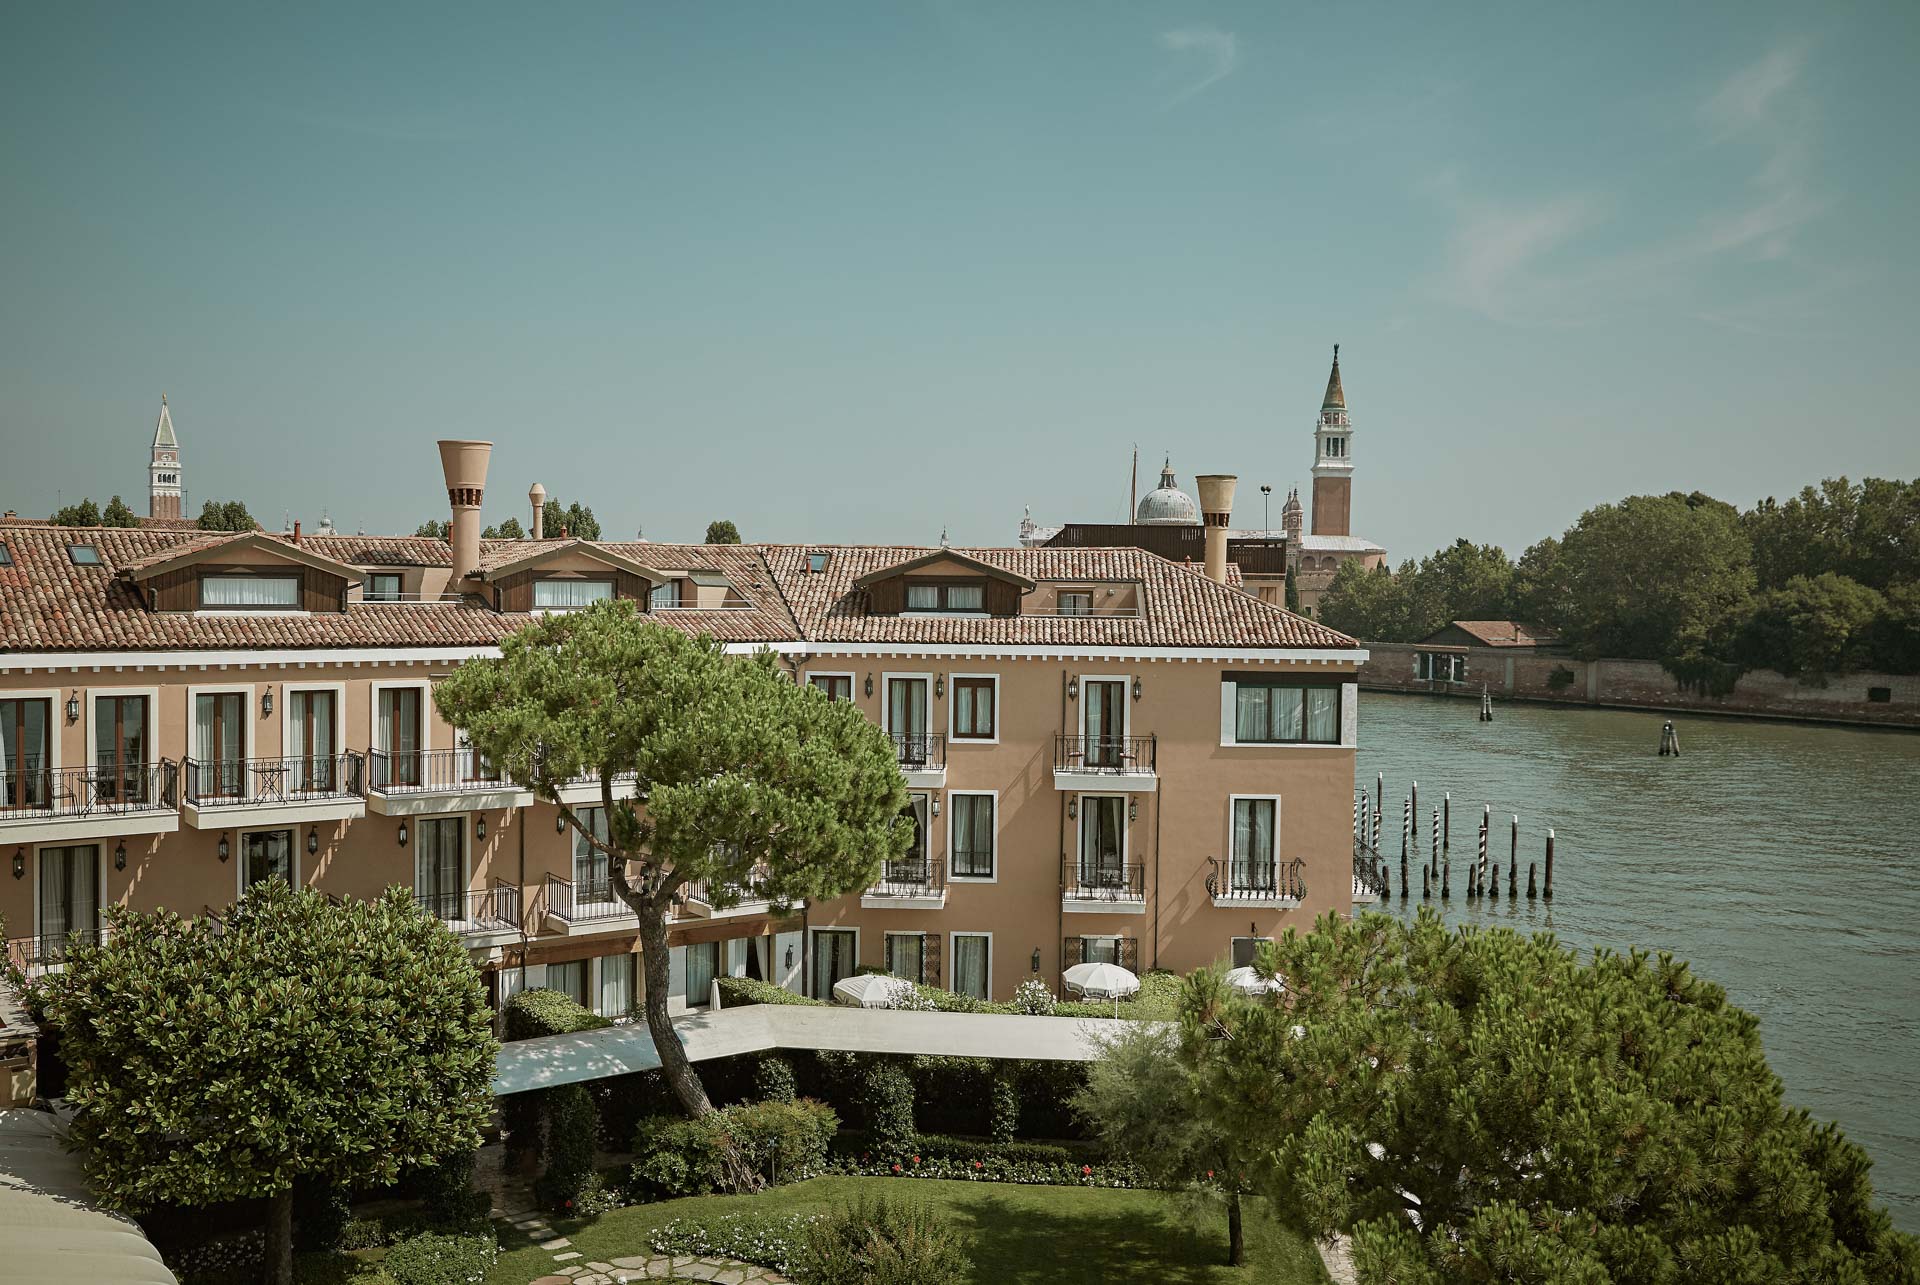 Hotel Cipriani, A Belmond Hotel, Venice from $759. Venice Hotel